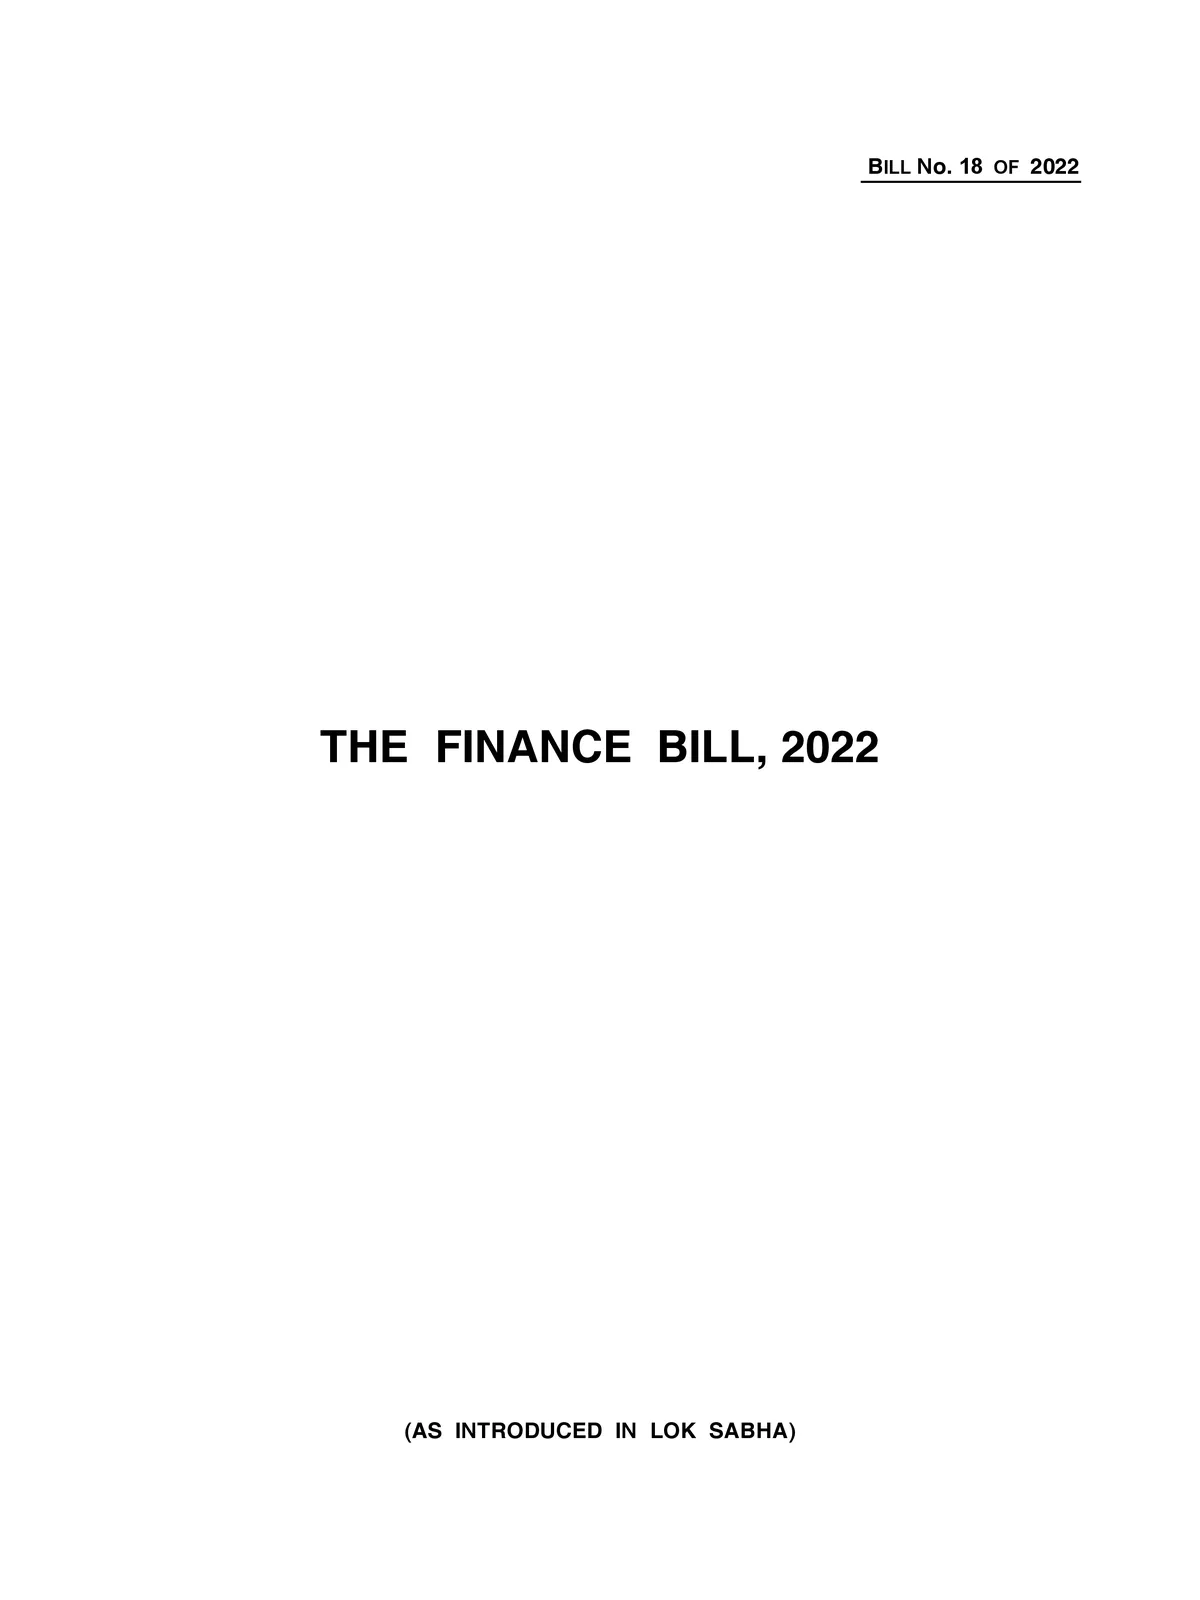 Finance Bill 2022